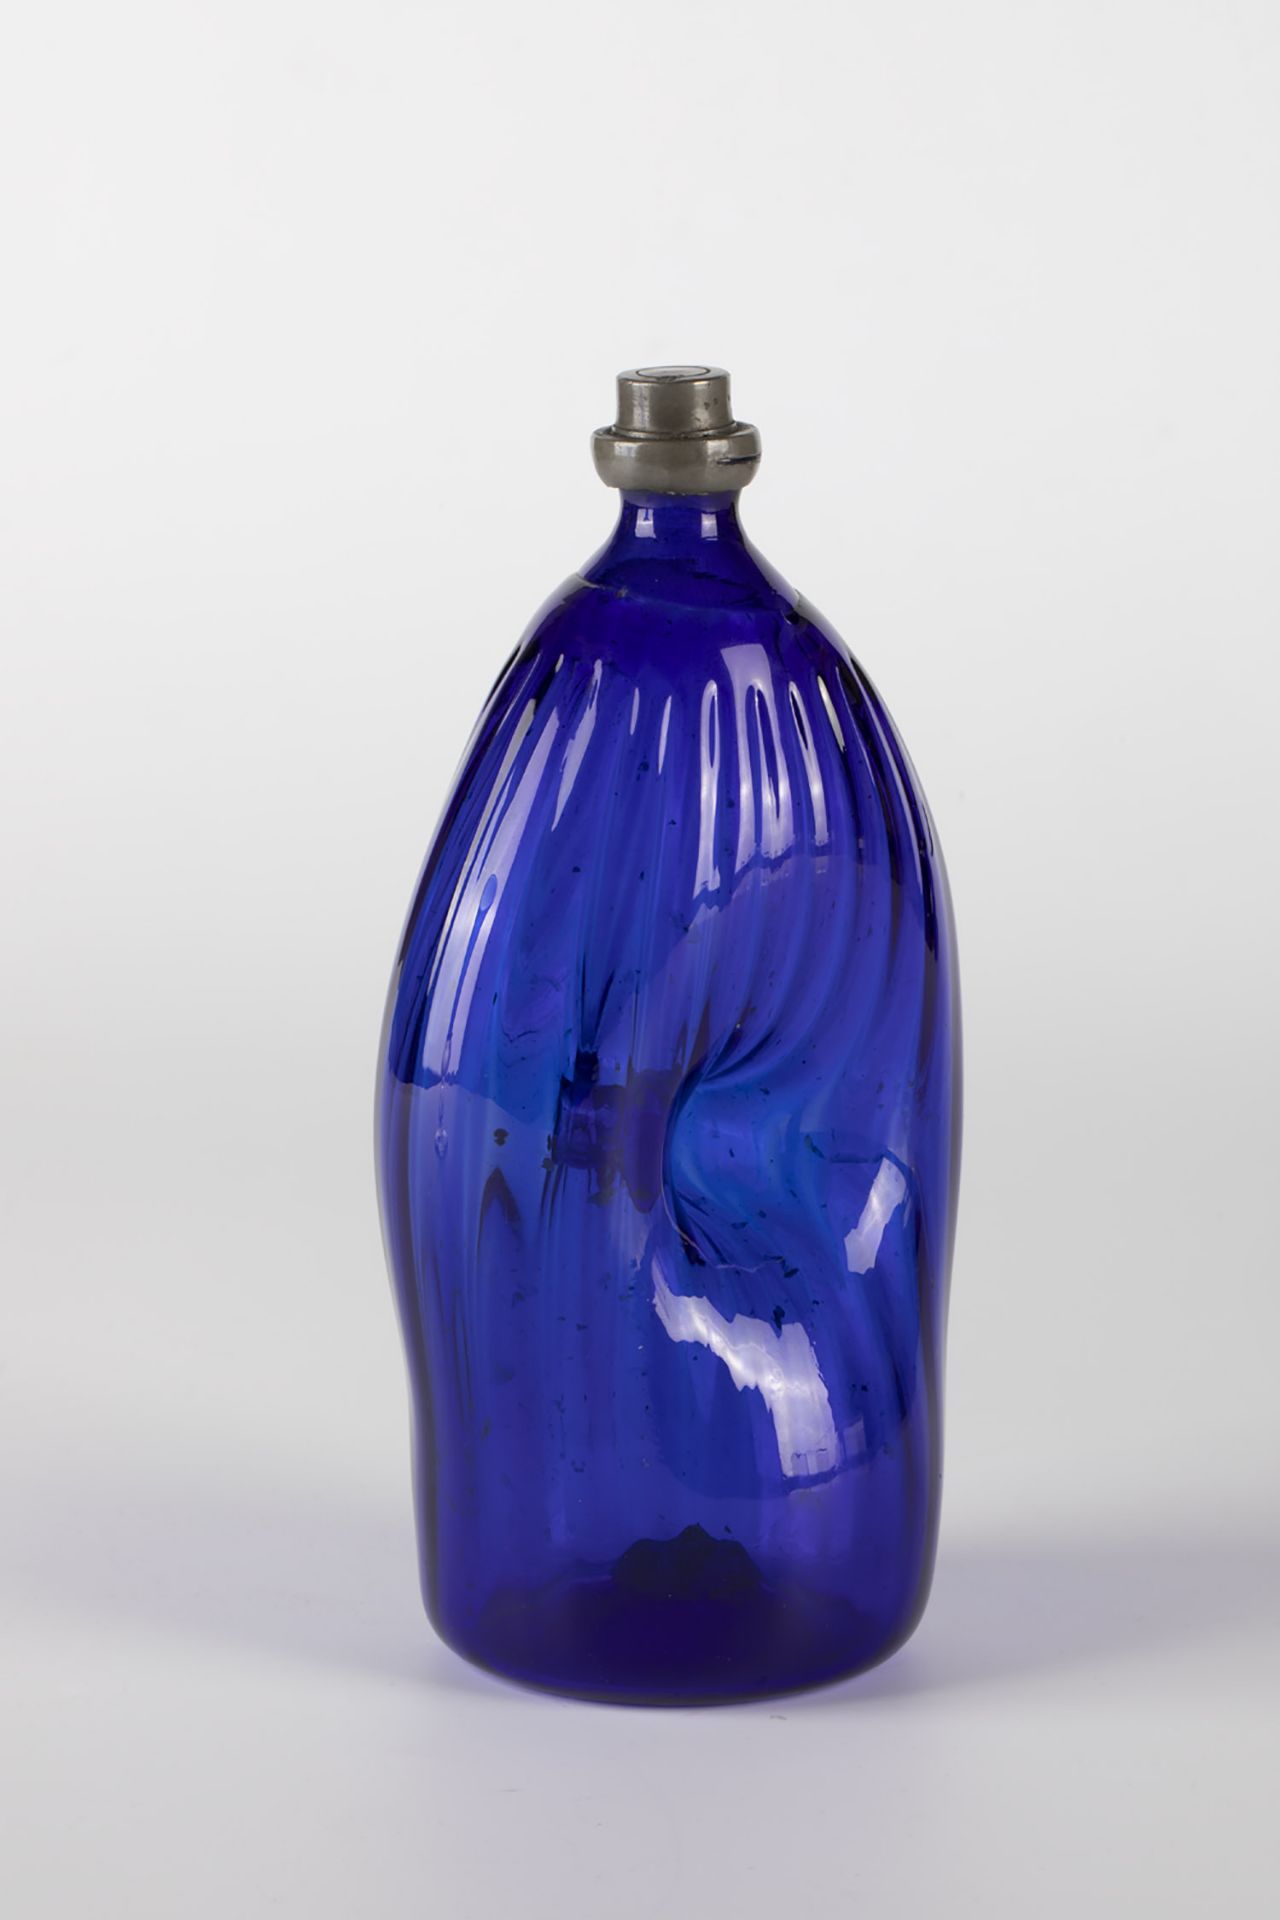 Umbilical bottle made of cobalt blue glass - Image 2 of 2